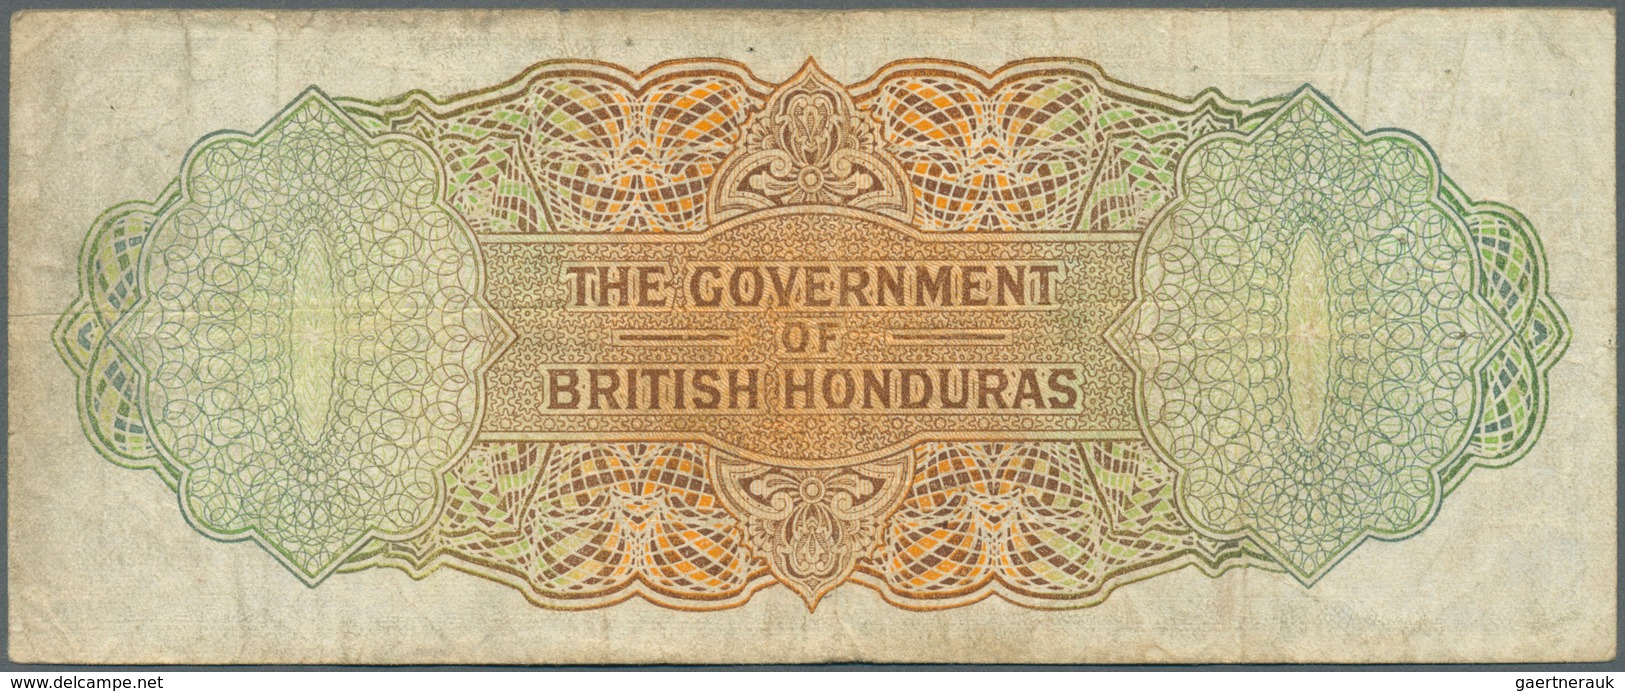 01161 British Honduras: Government Of British Honduras 10 Dollars April 1st 1964, P.31b, Still A Nice Note - Honduras